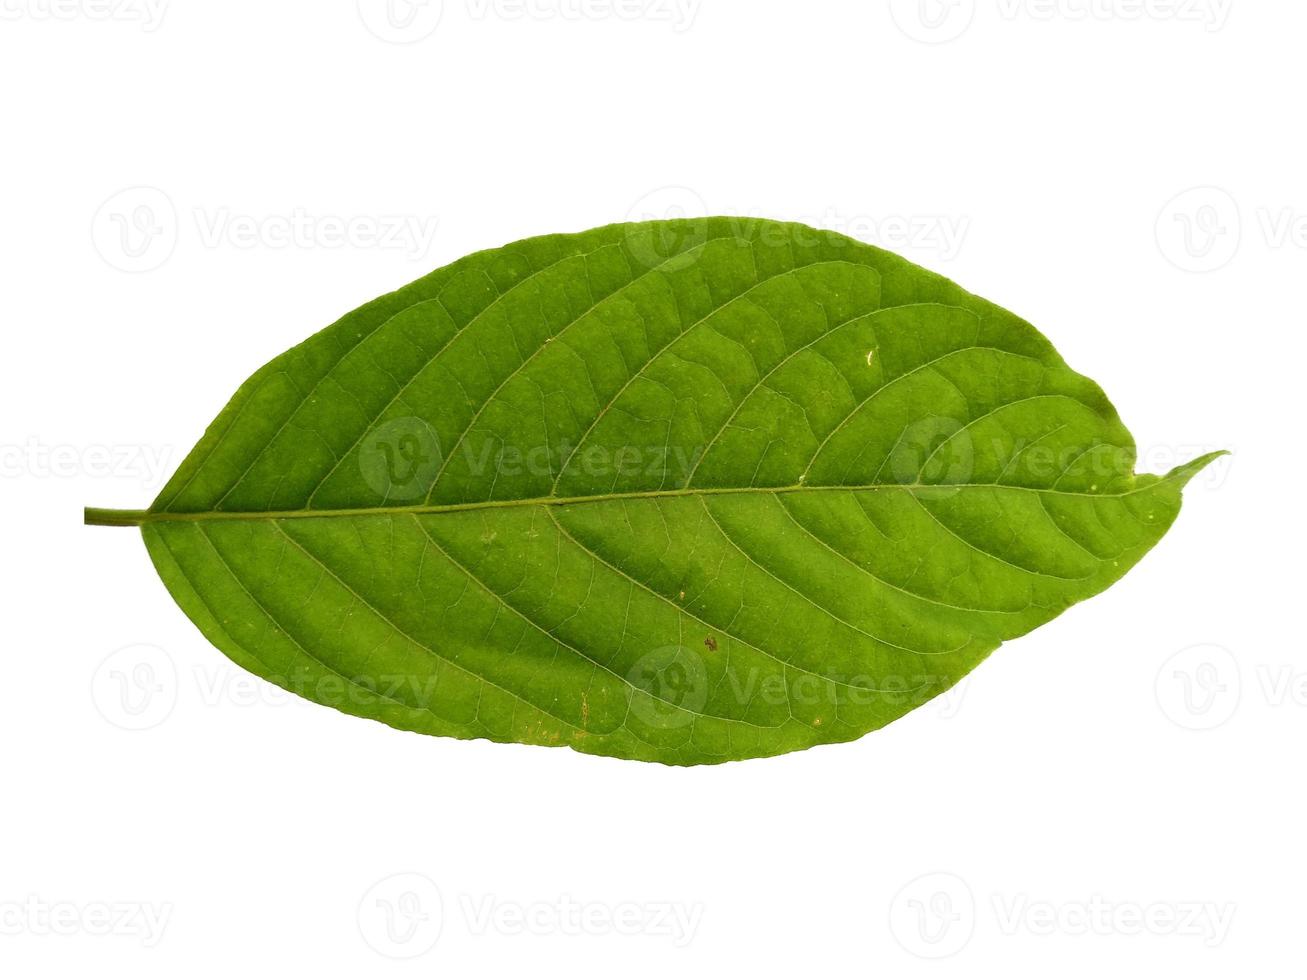 cananga odorata blad eller plantae blad isolerad på vit bakgrund foto